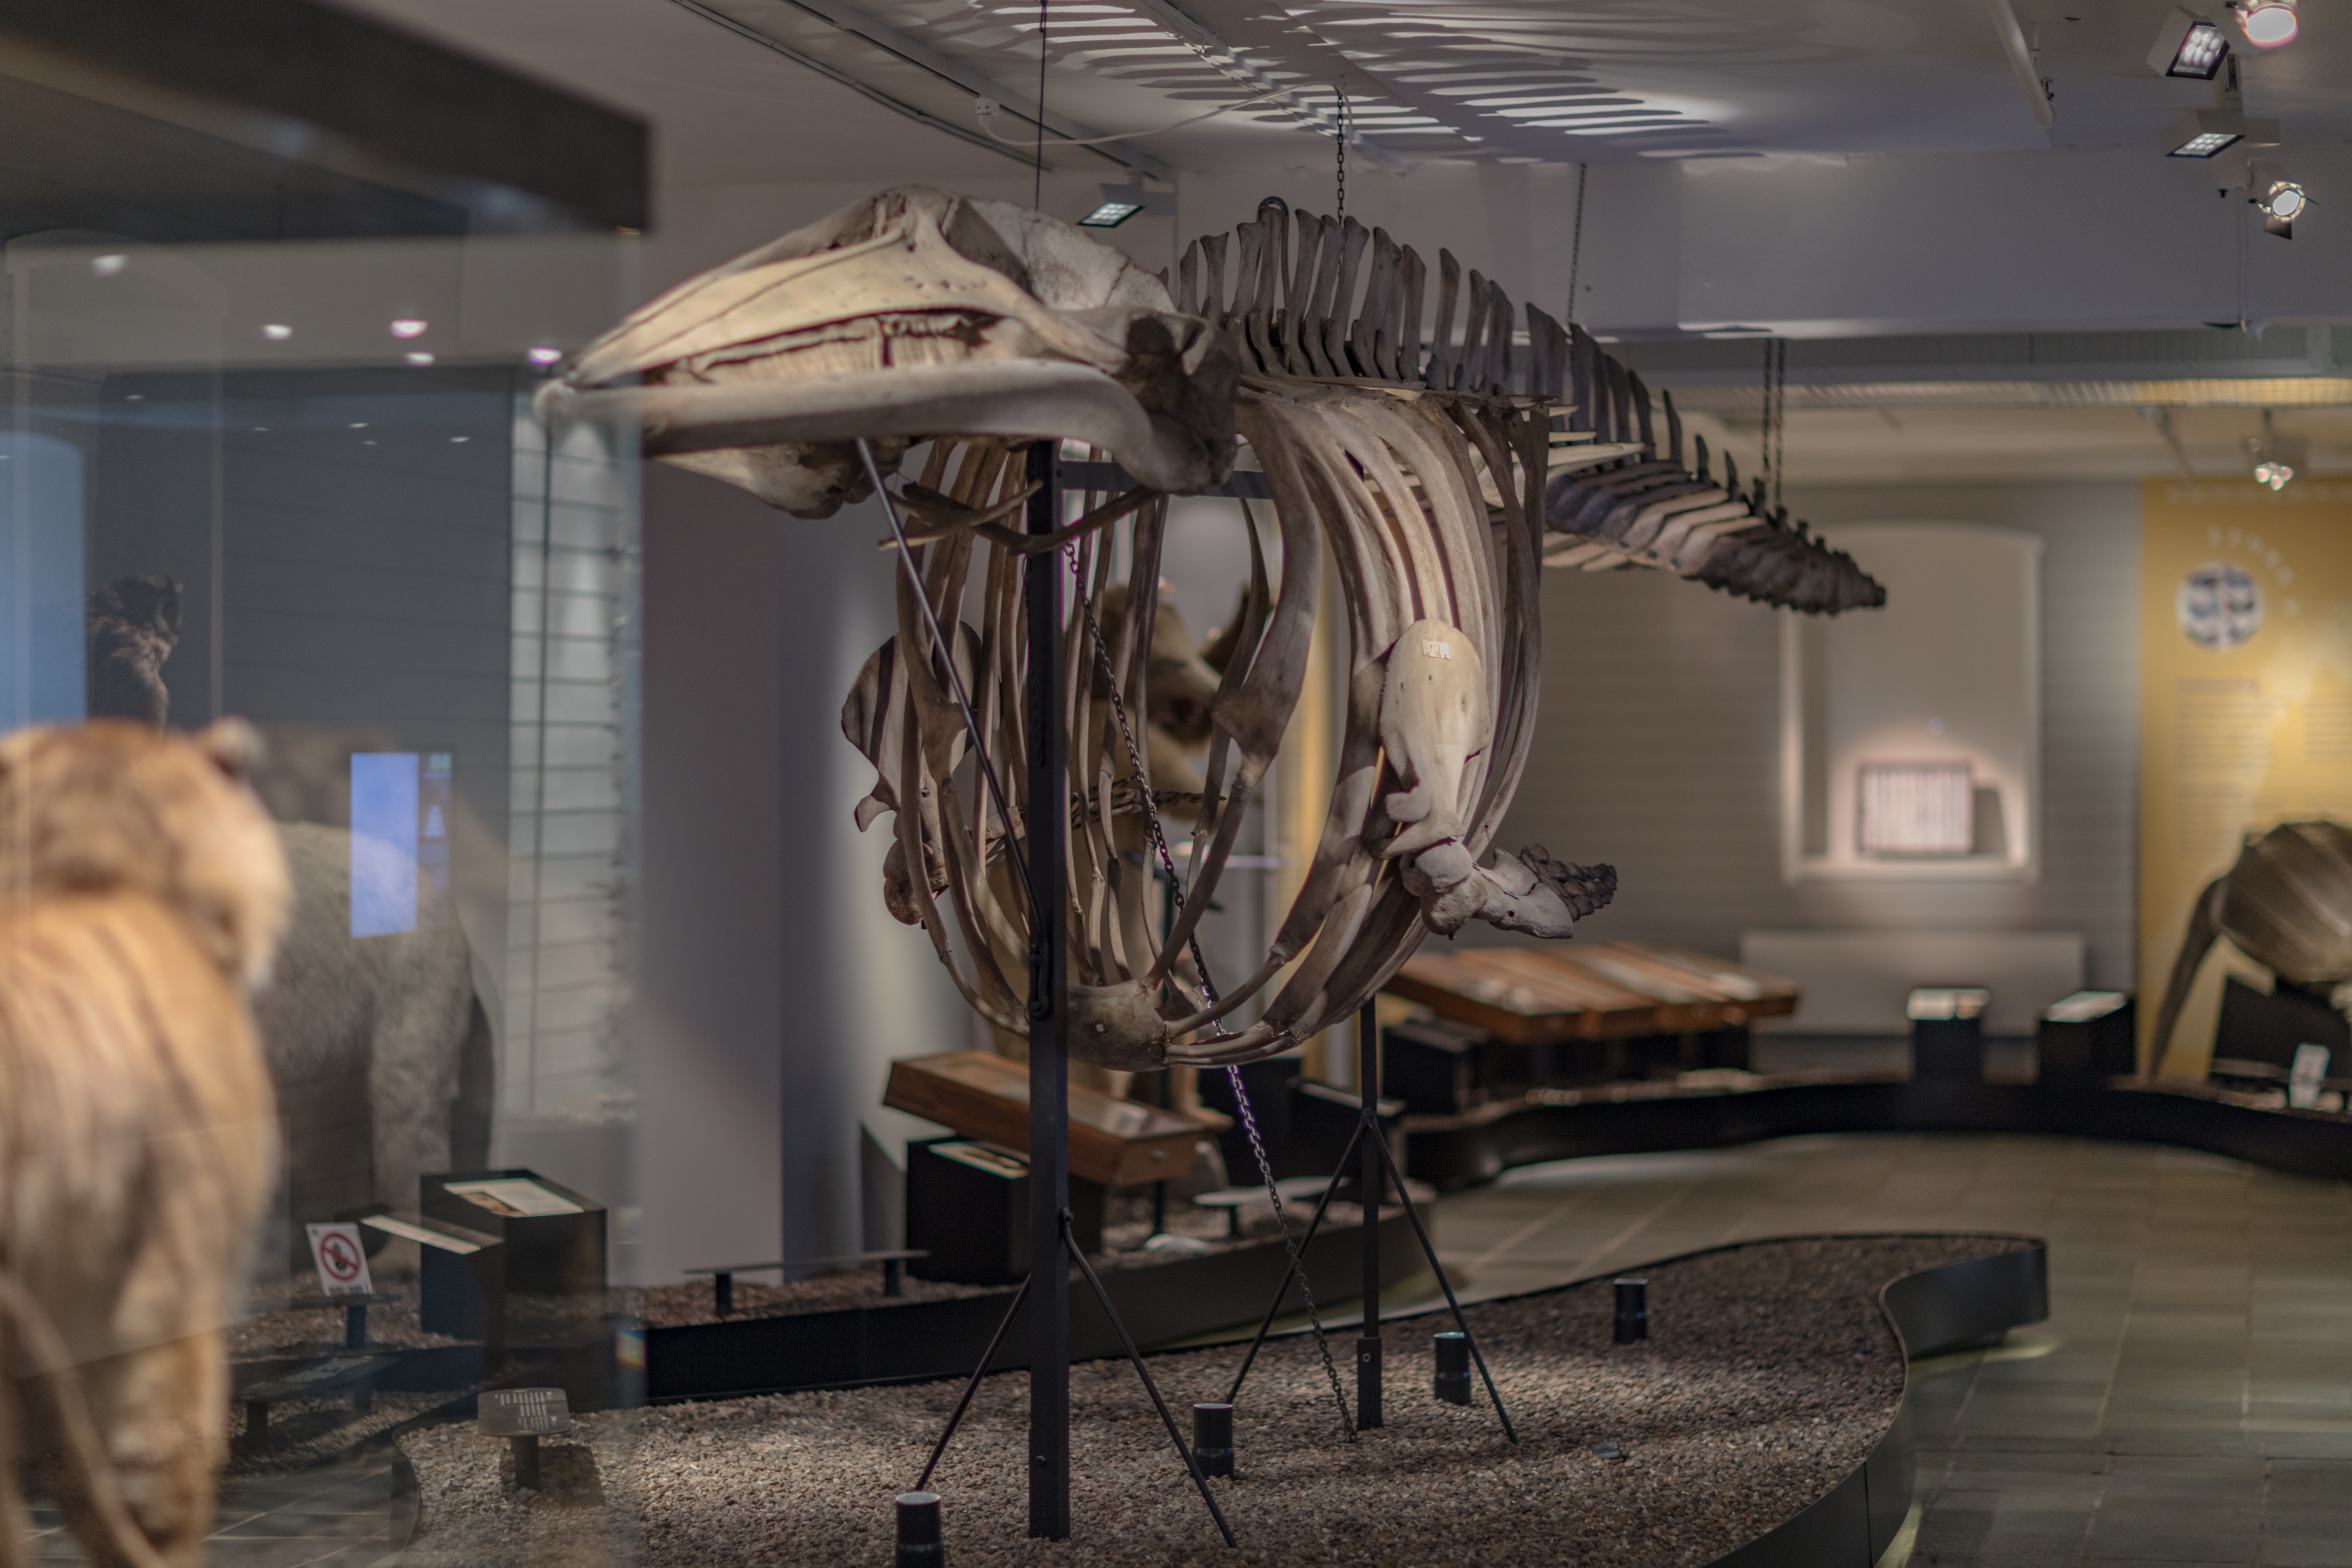 Minke Whale from the Gandsfjord 1884. Photo: Oddbjørn Erland Aarstad / MUST.